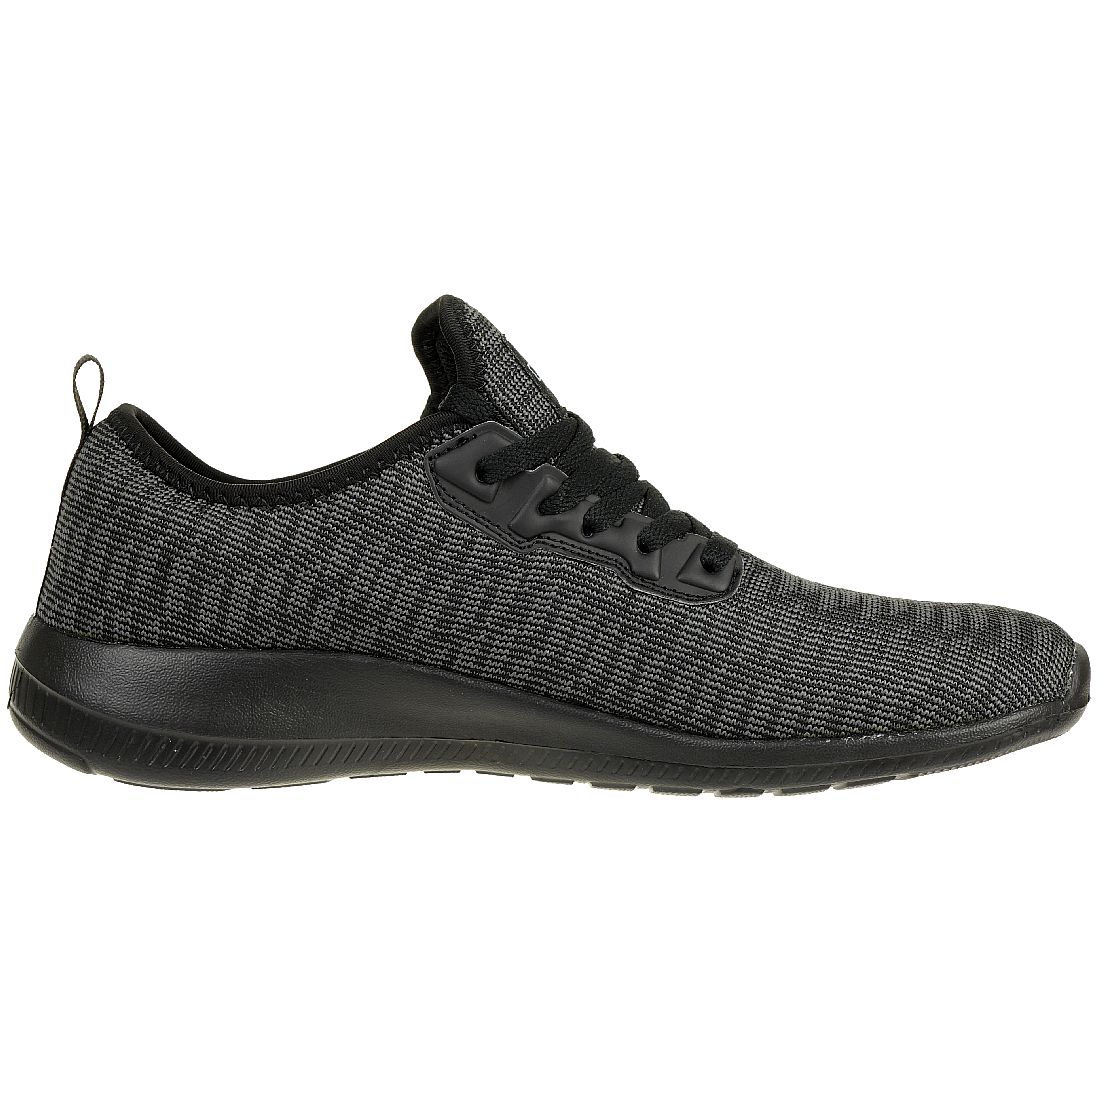 Kappa 242603 Sneaker Unisex Turnschuhe Schuhe schwarz